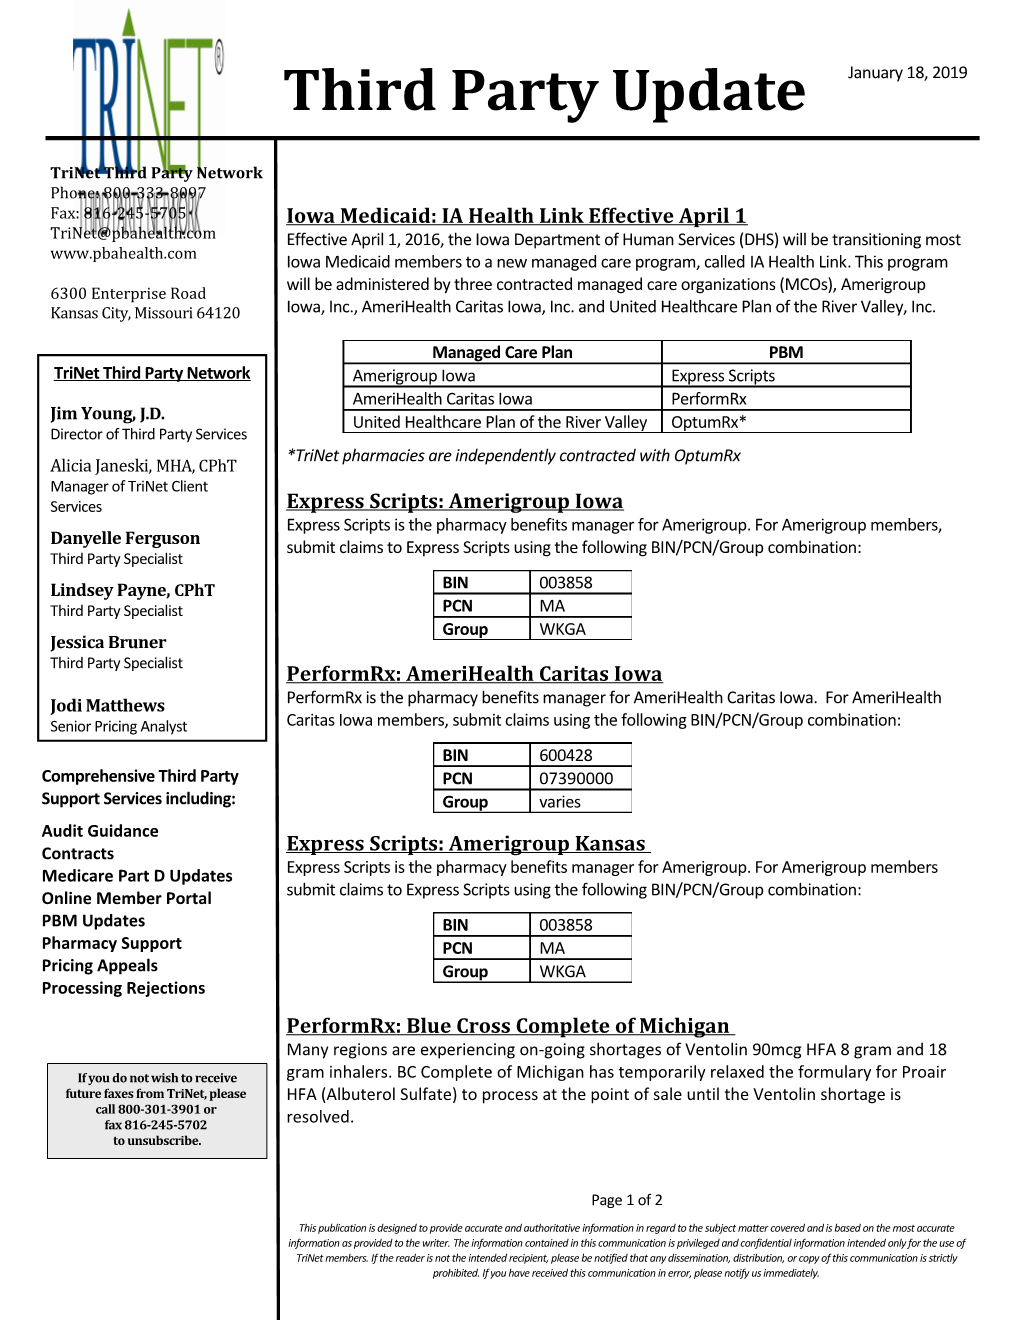 Iowa Medicaid: IA Health Link Effective April 1